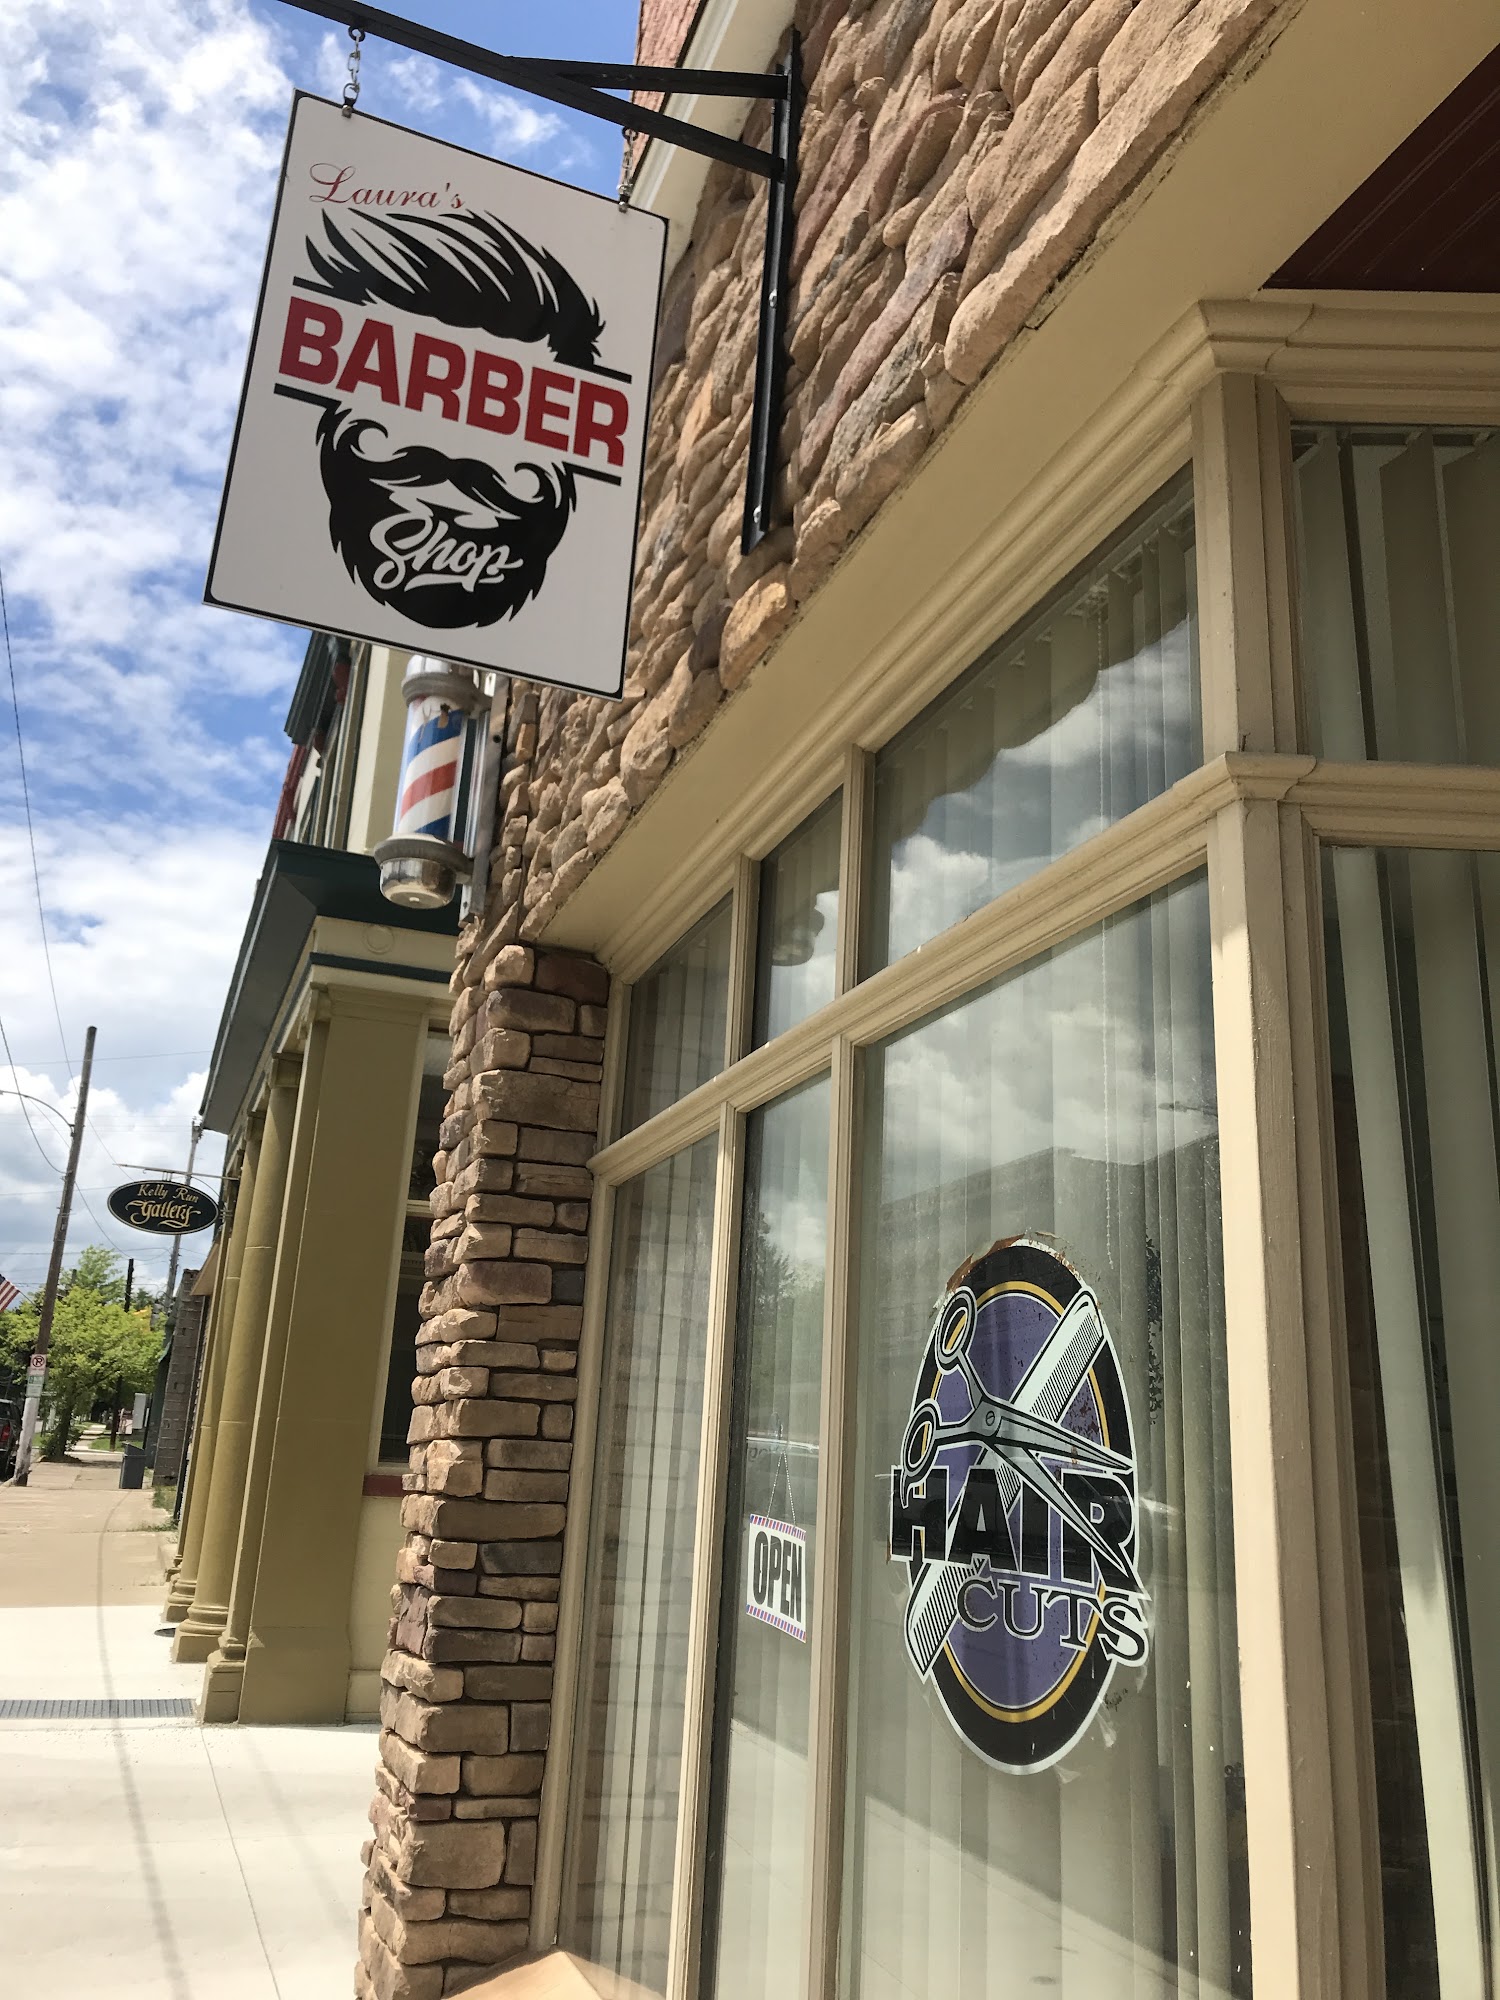 Laura's Barber Shop 258 S Main St, Cambridge Springs Pennsylvania 16403